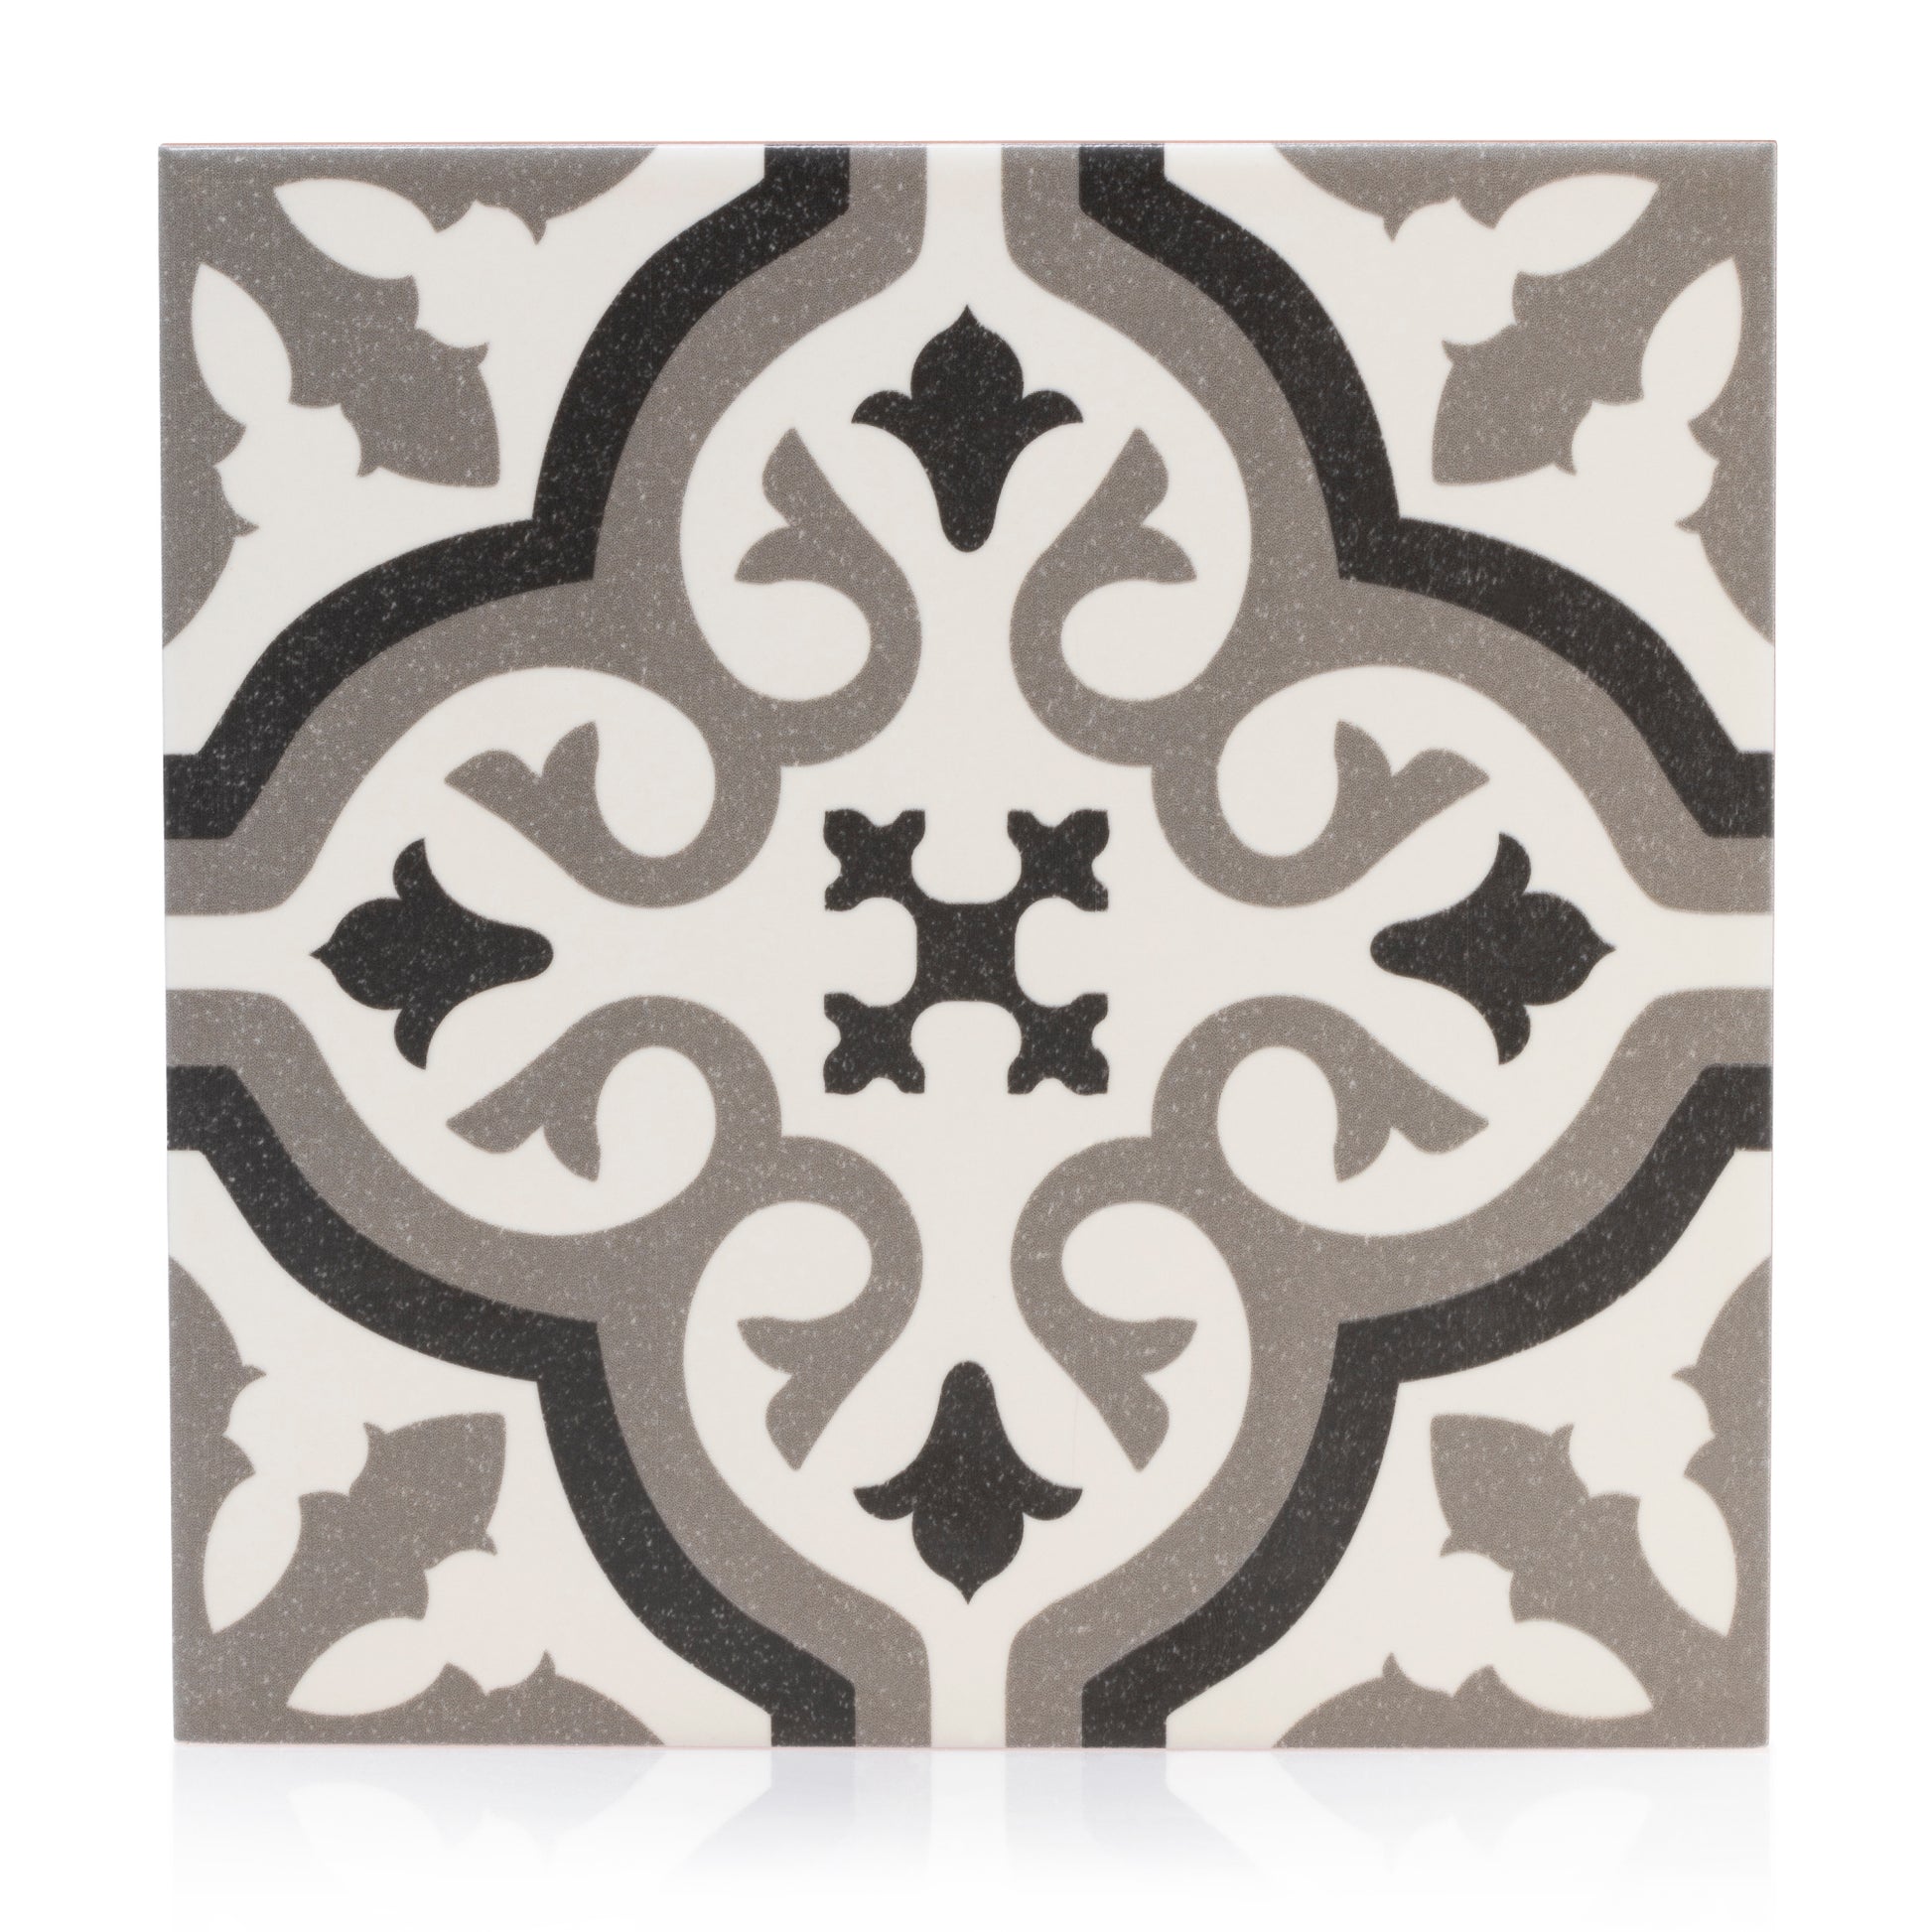 8x8 Tradition White Ceramic Tile - Industry Tile